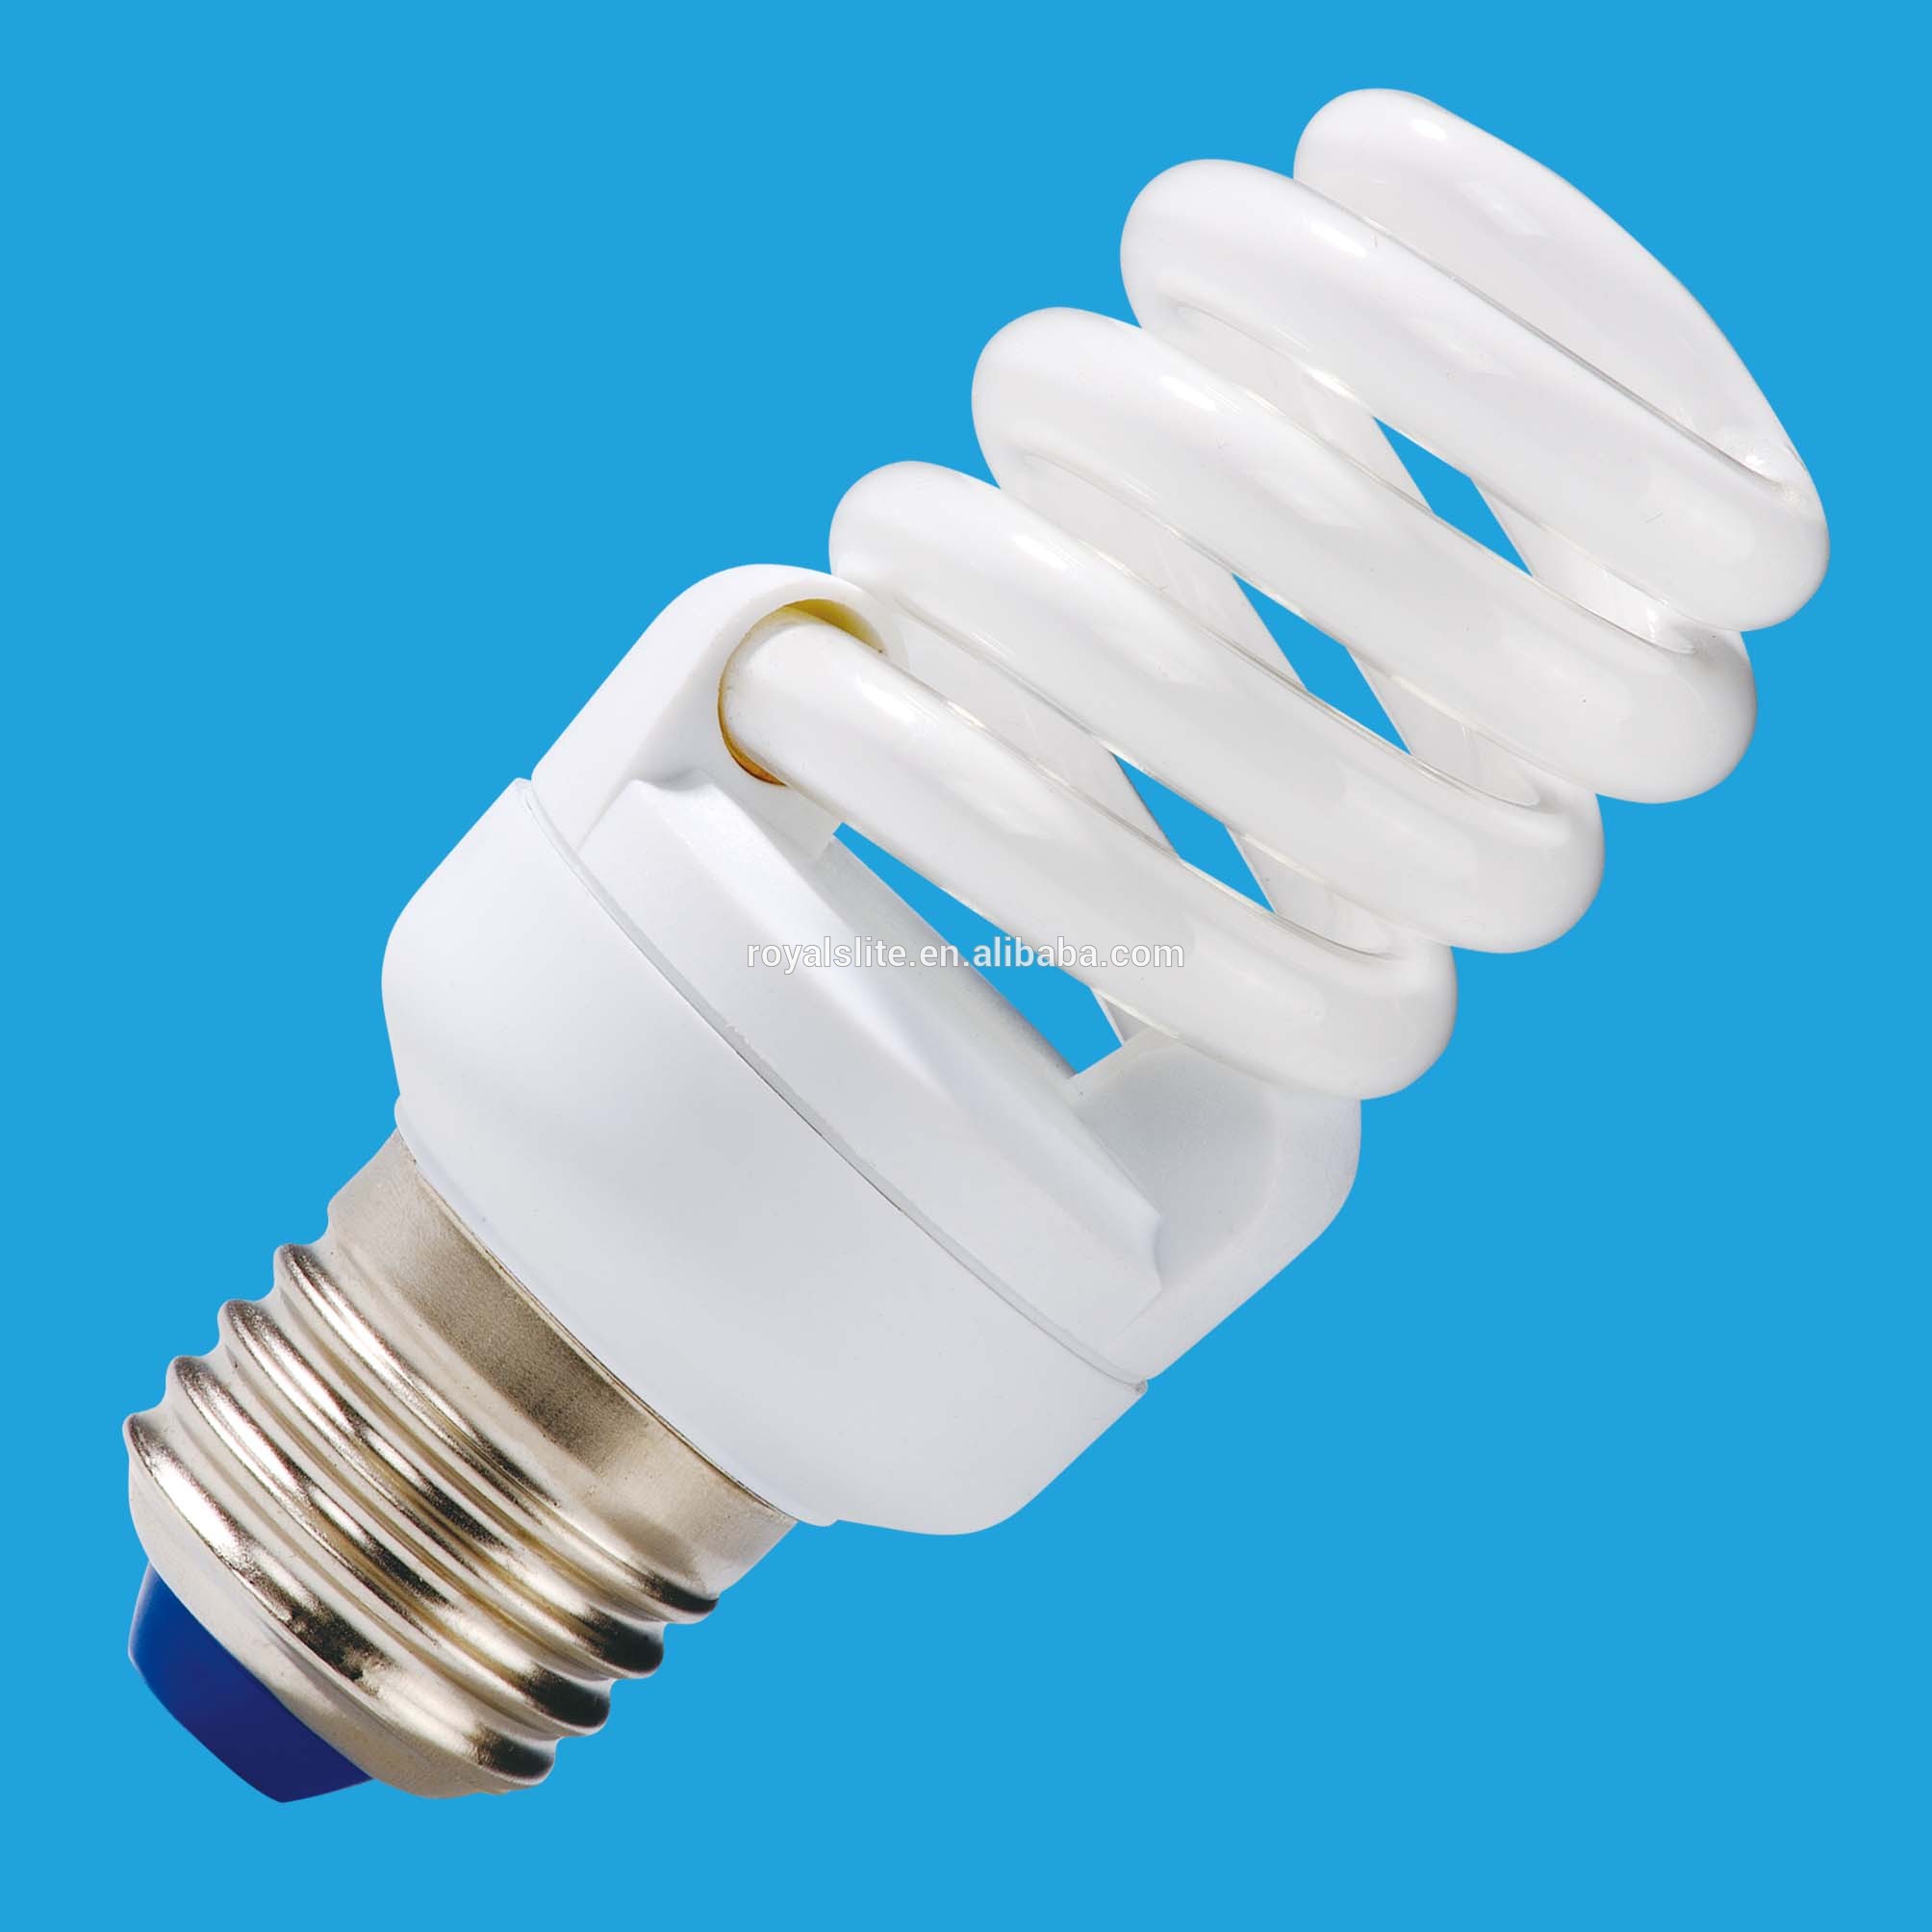 Spiral Light Energy Saving Lamp on Sale